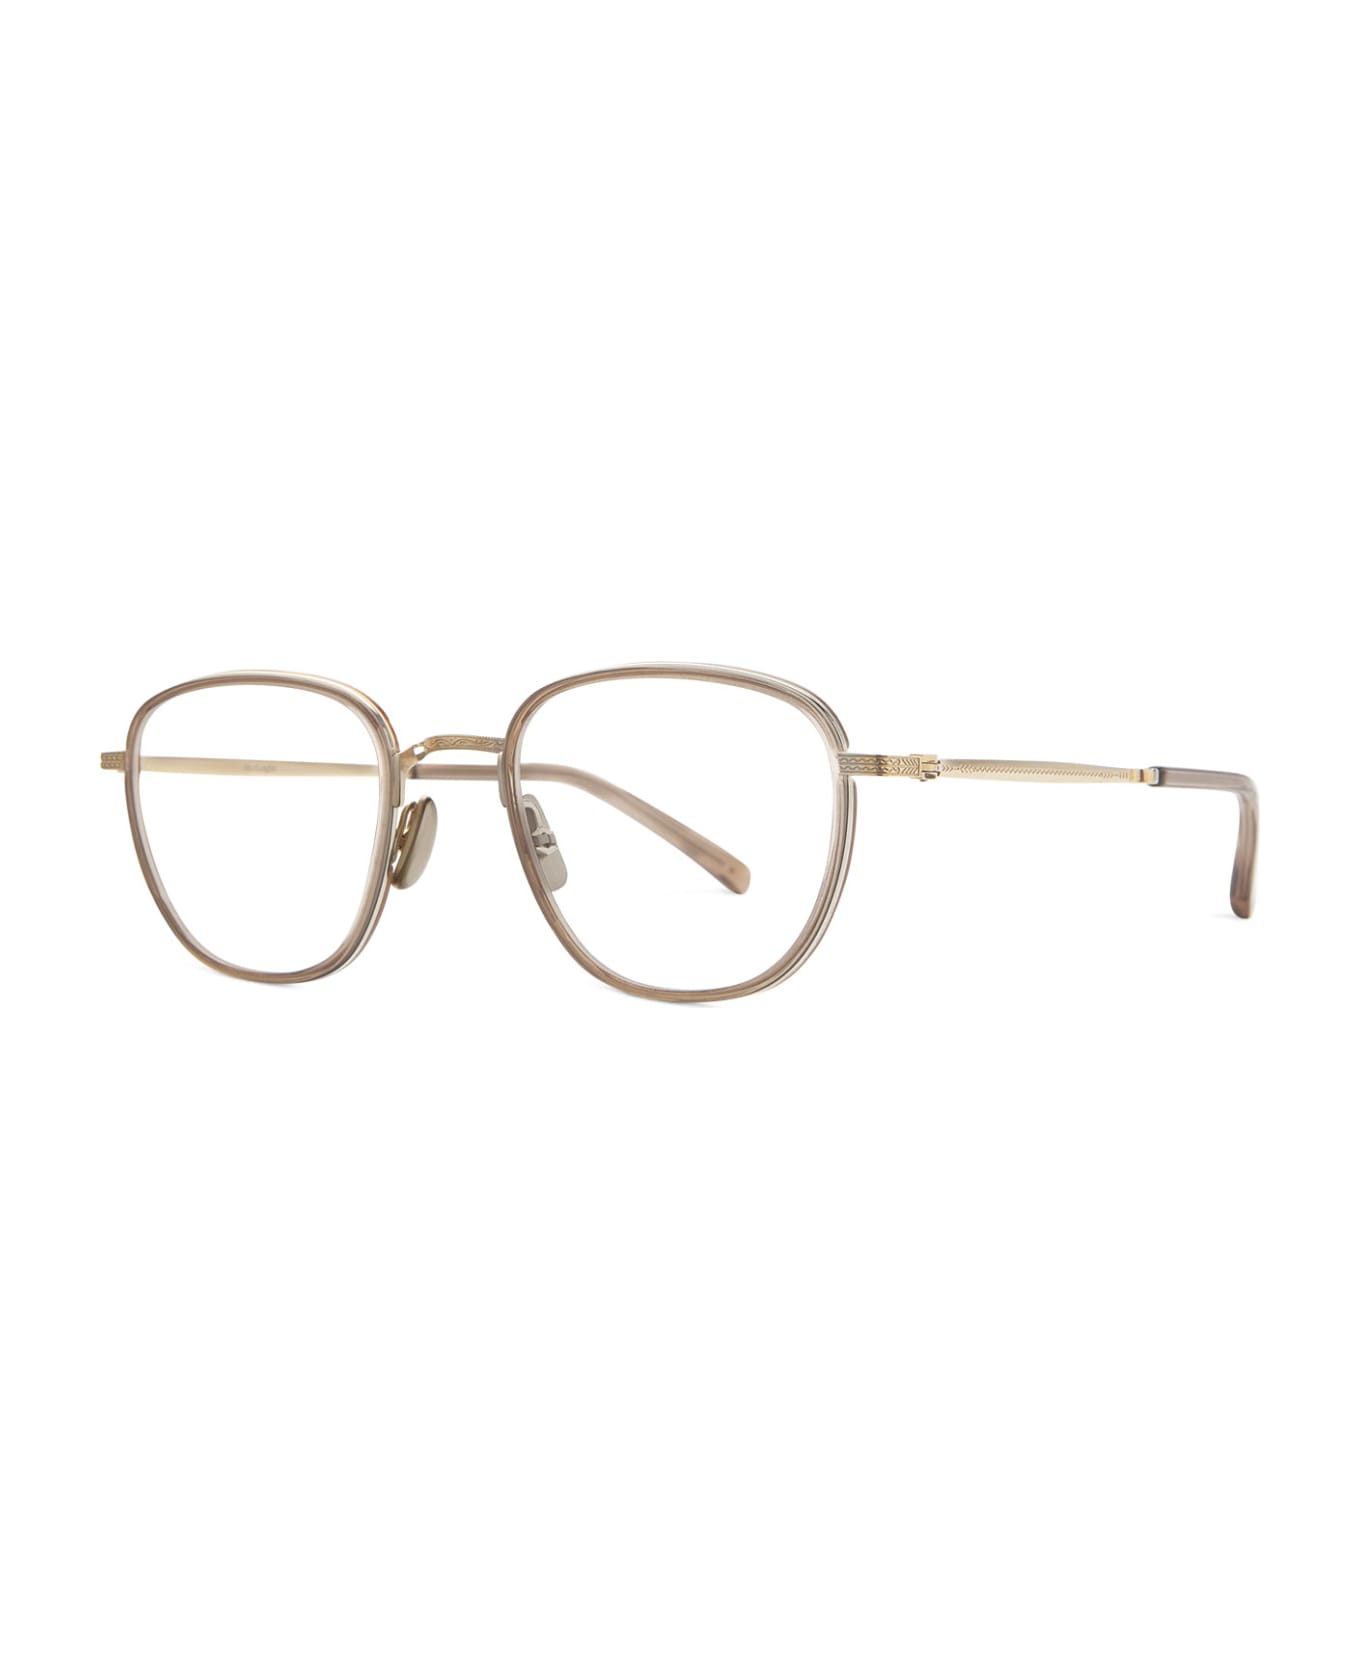 Mr. Leight Griffith Ii C Topaz-12k White Gold Glasses - Topaz-12K White Gold